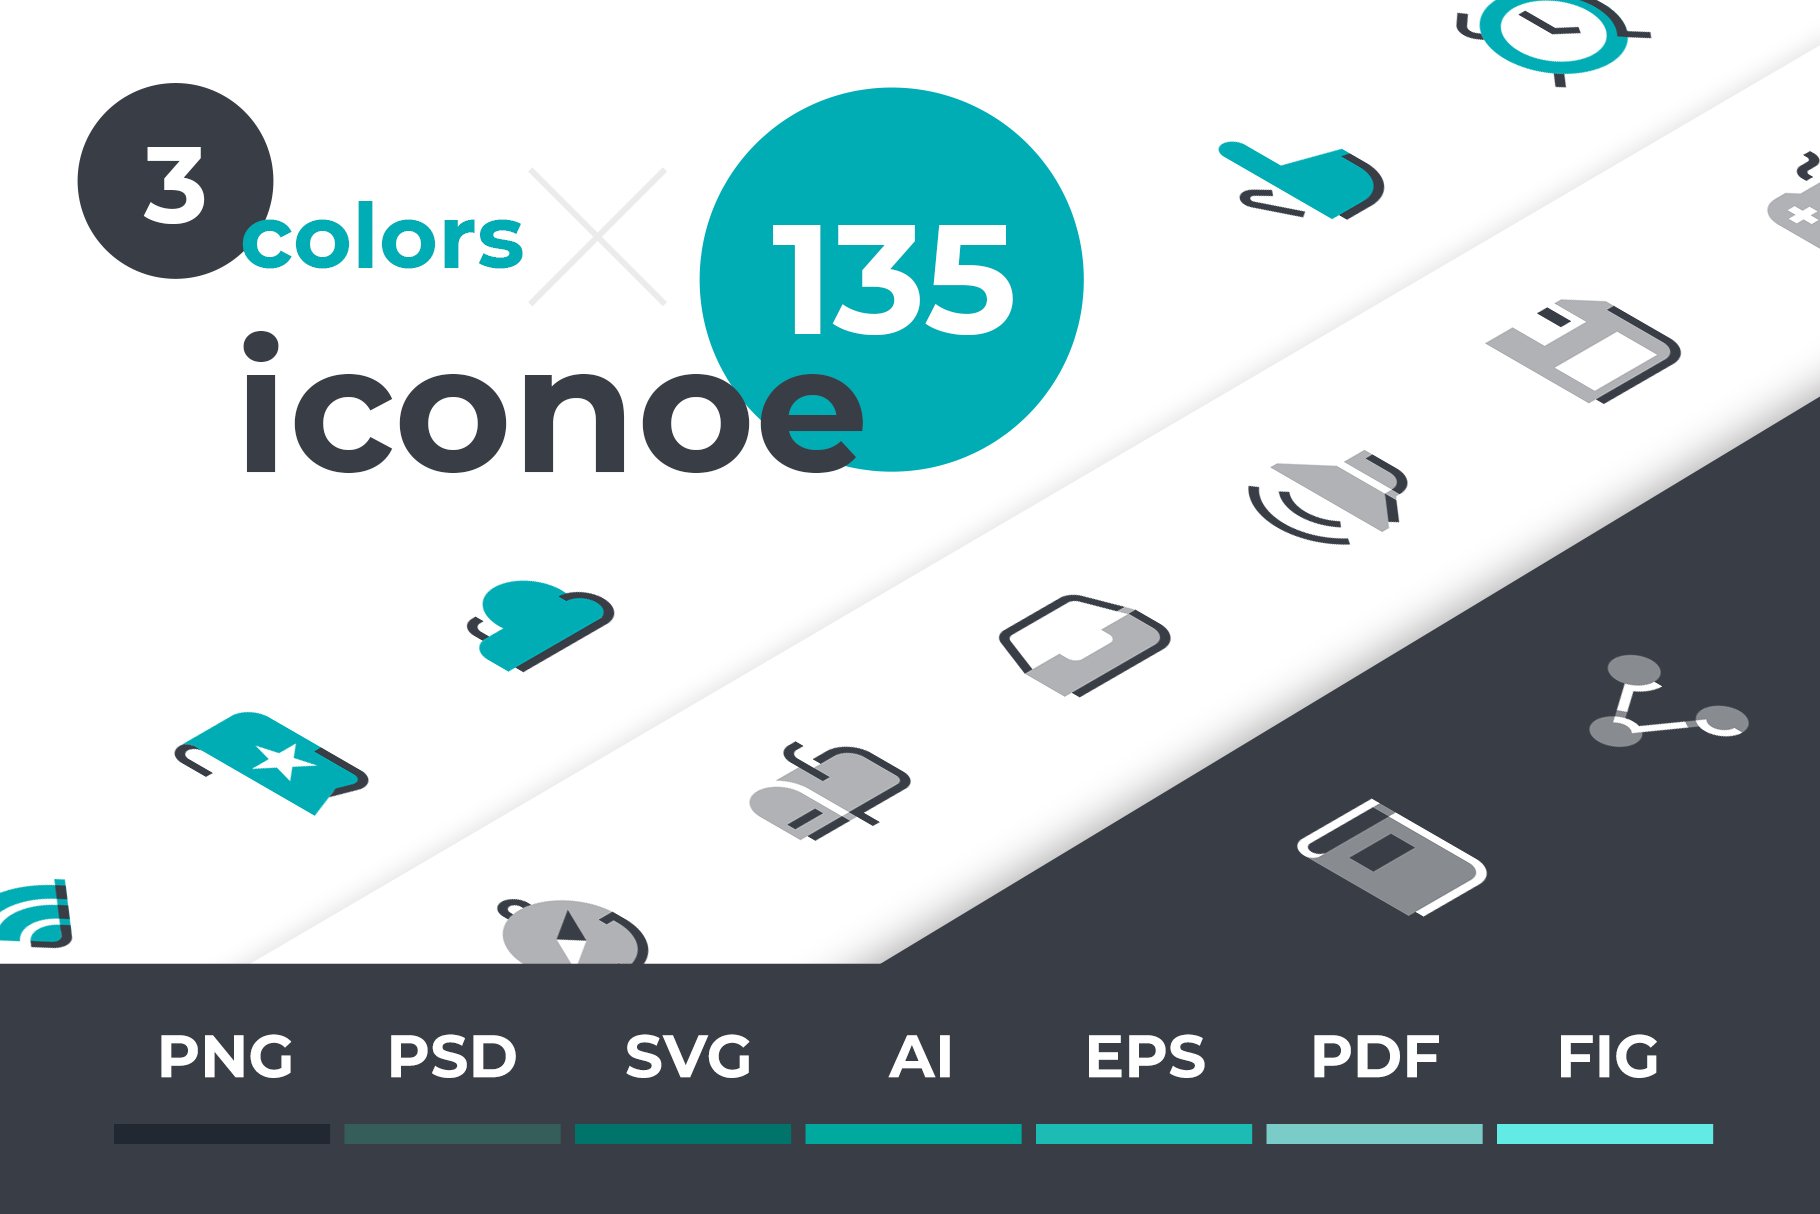 Iconoe - 135 DuoTone Icons cover image.